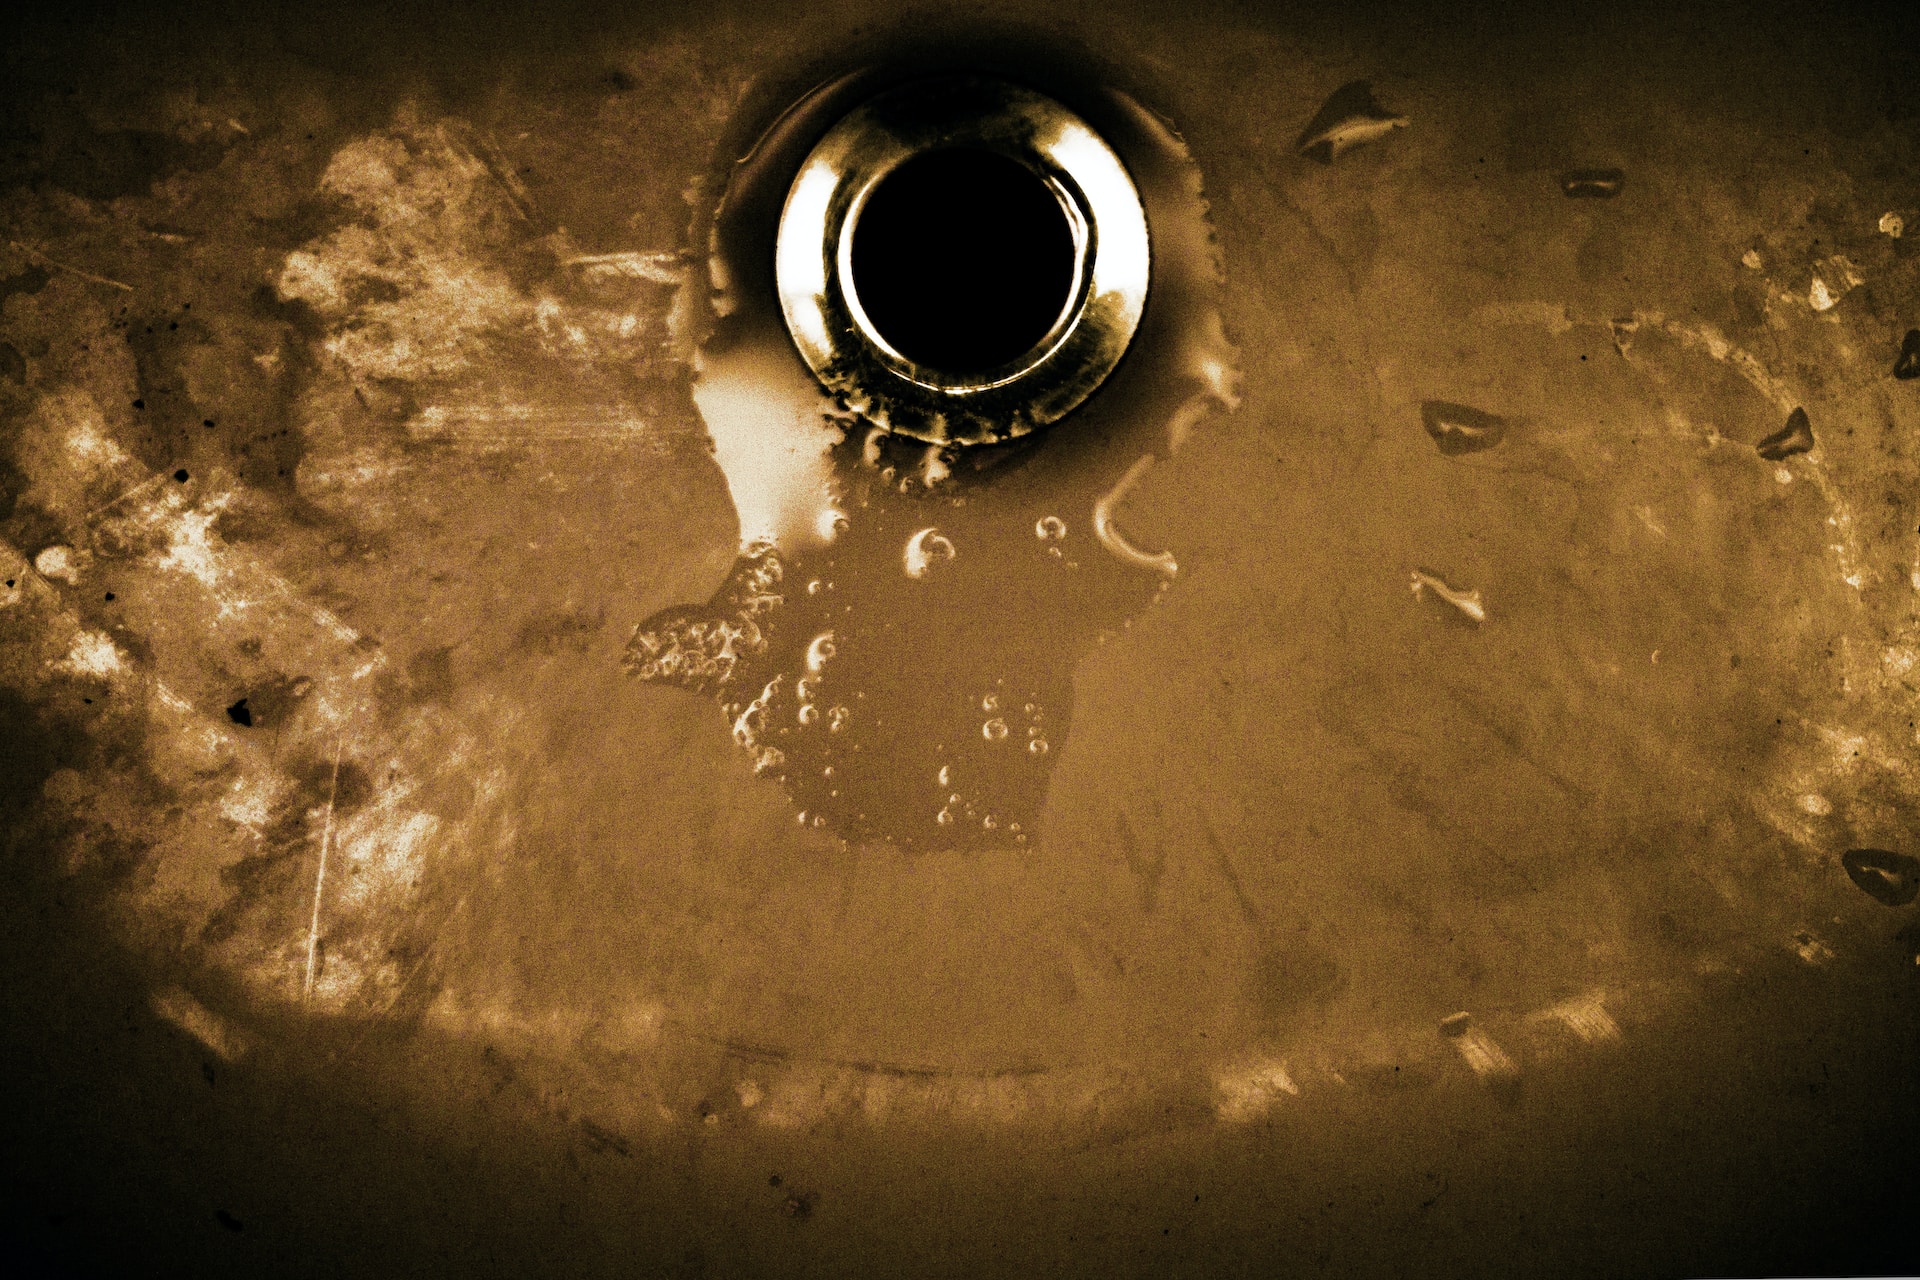 A sink